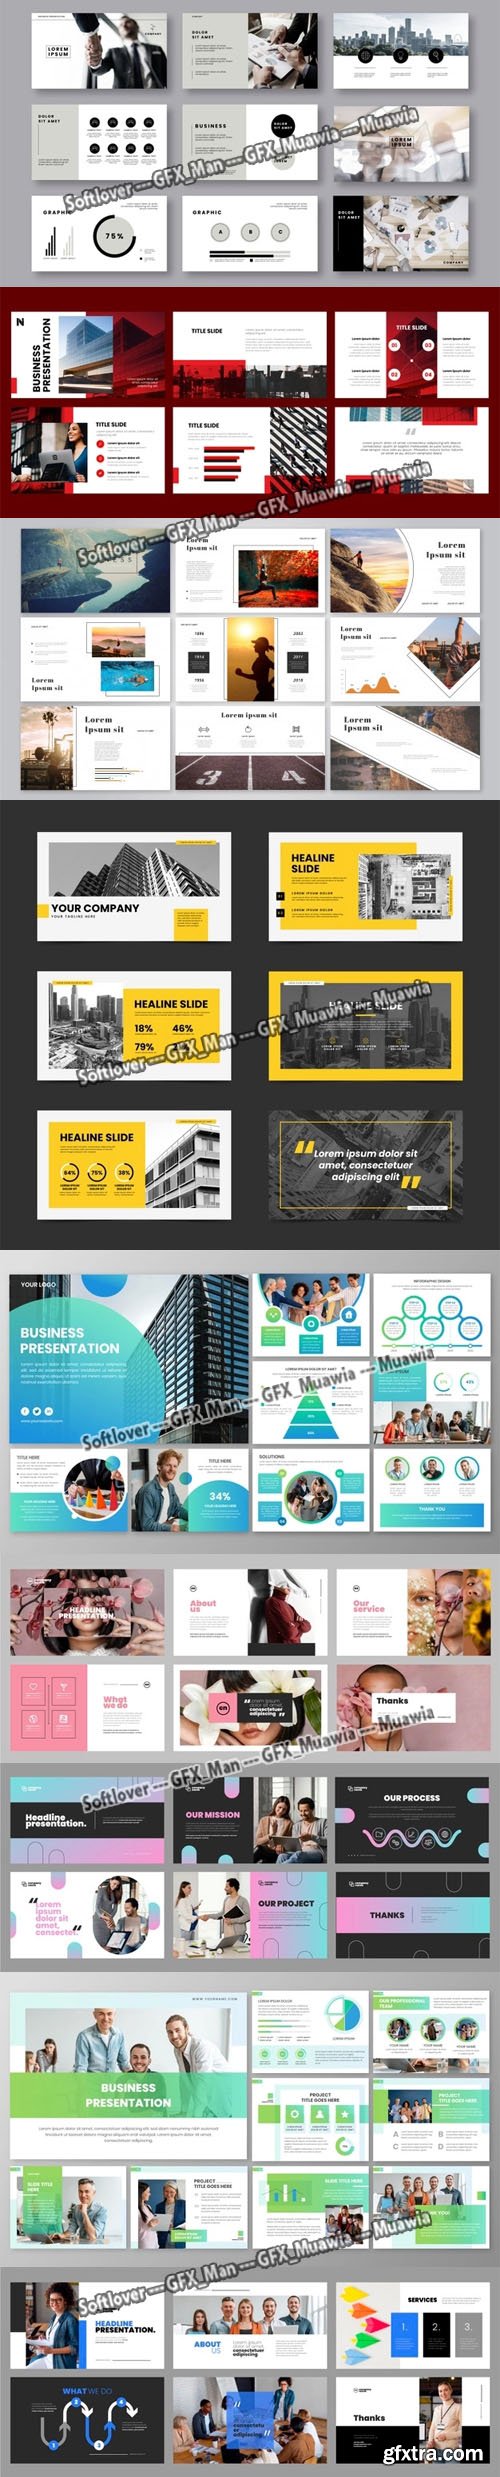 60+ Business Presentation Slides Collection - 9 Vector Templates